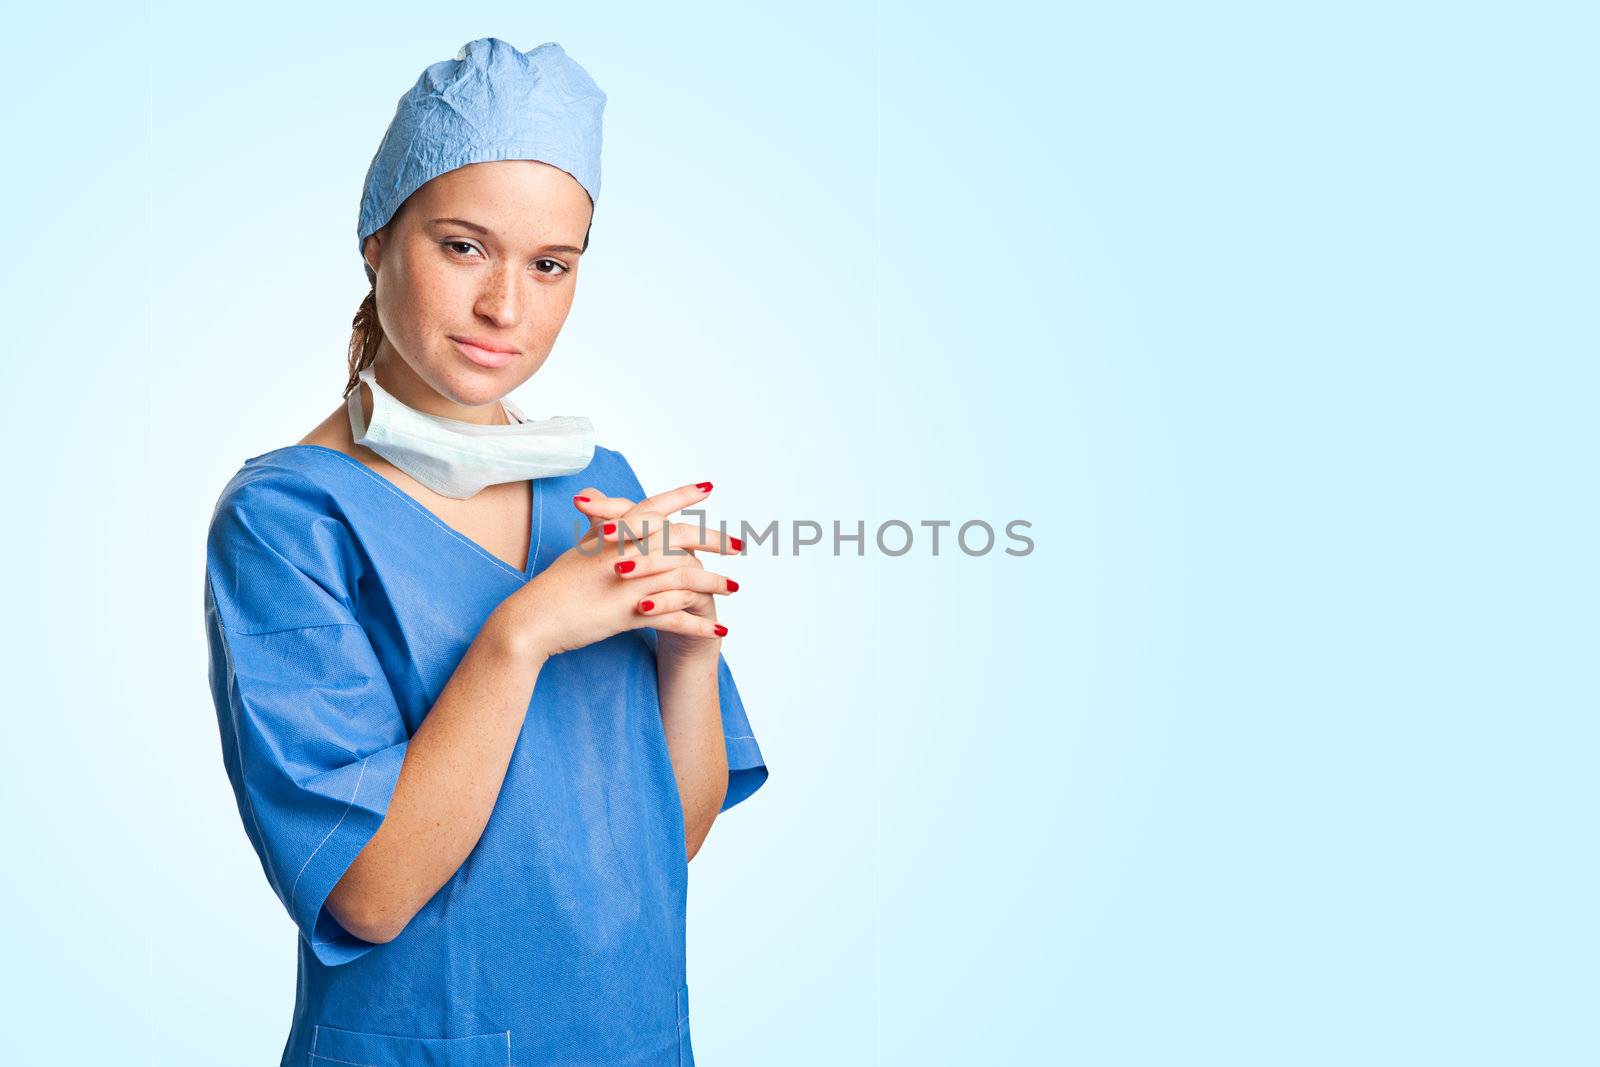 Female Surgeon by ruigsantos